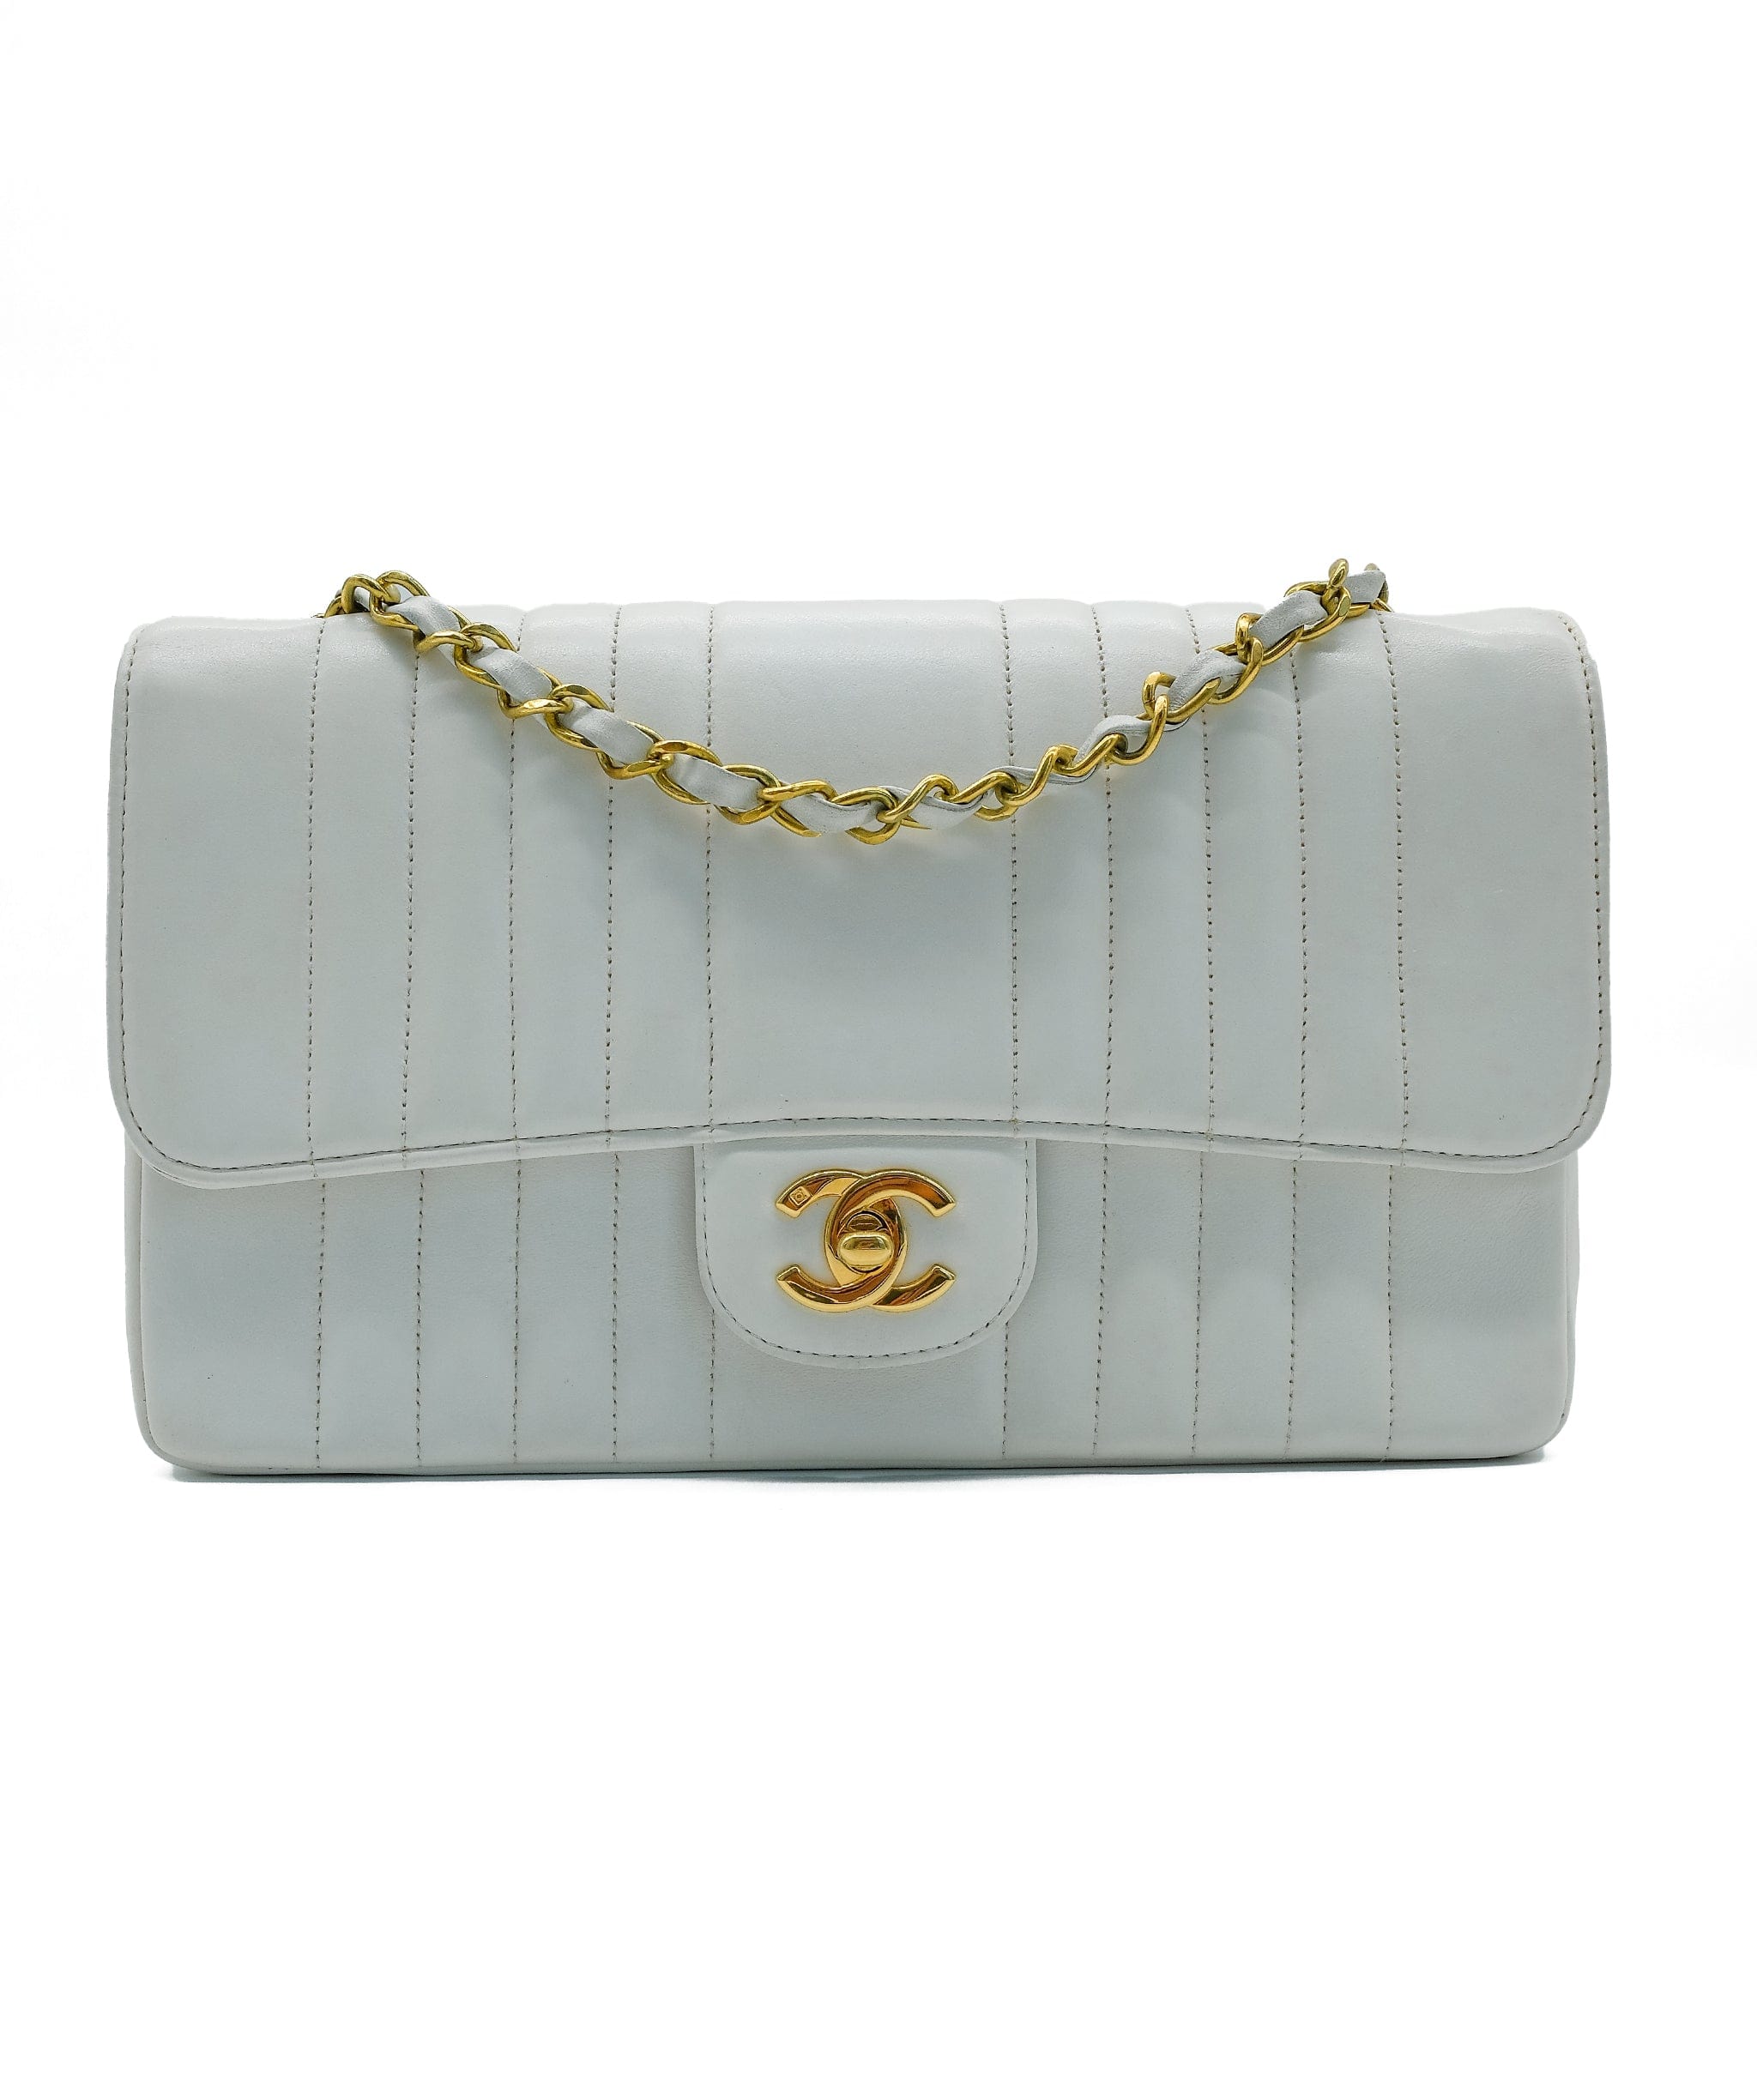 Chanel Mademoiselle White Flap bag ASL7867